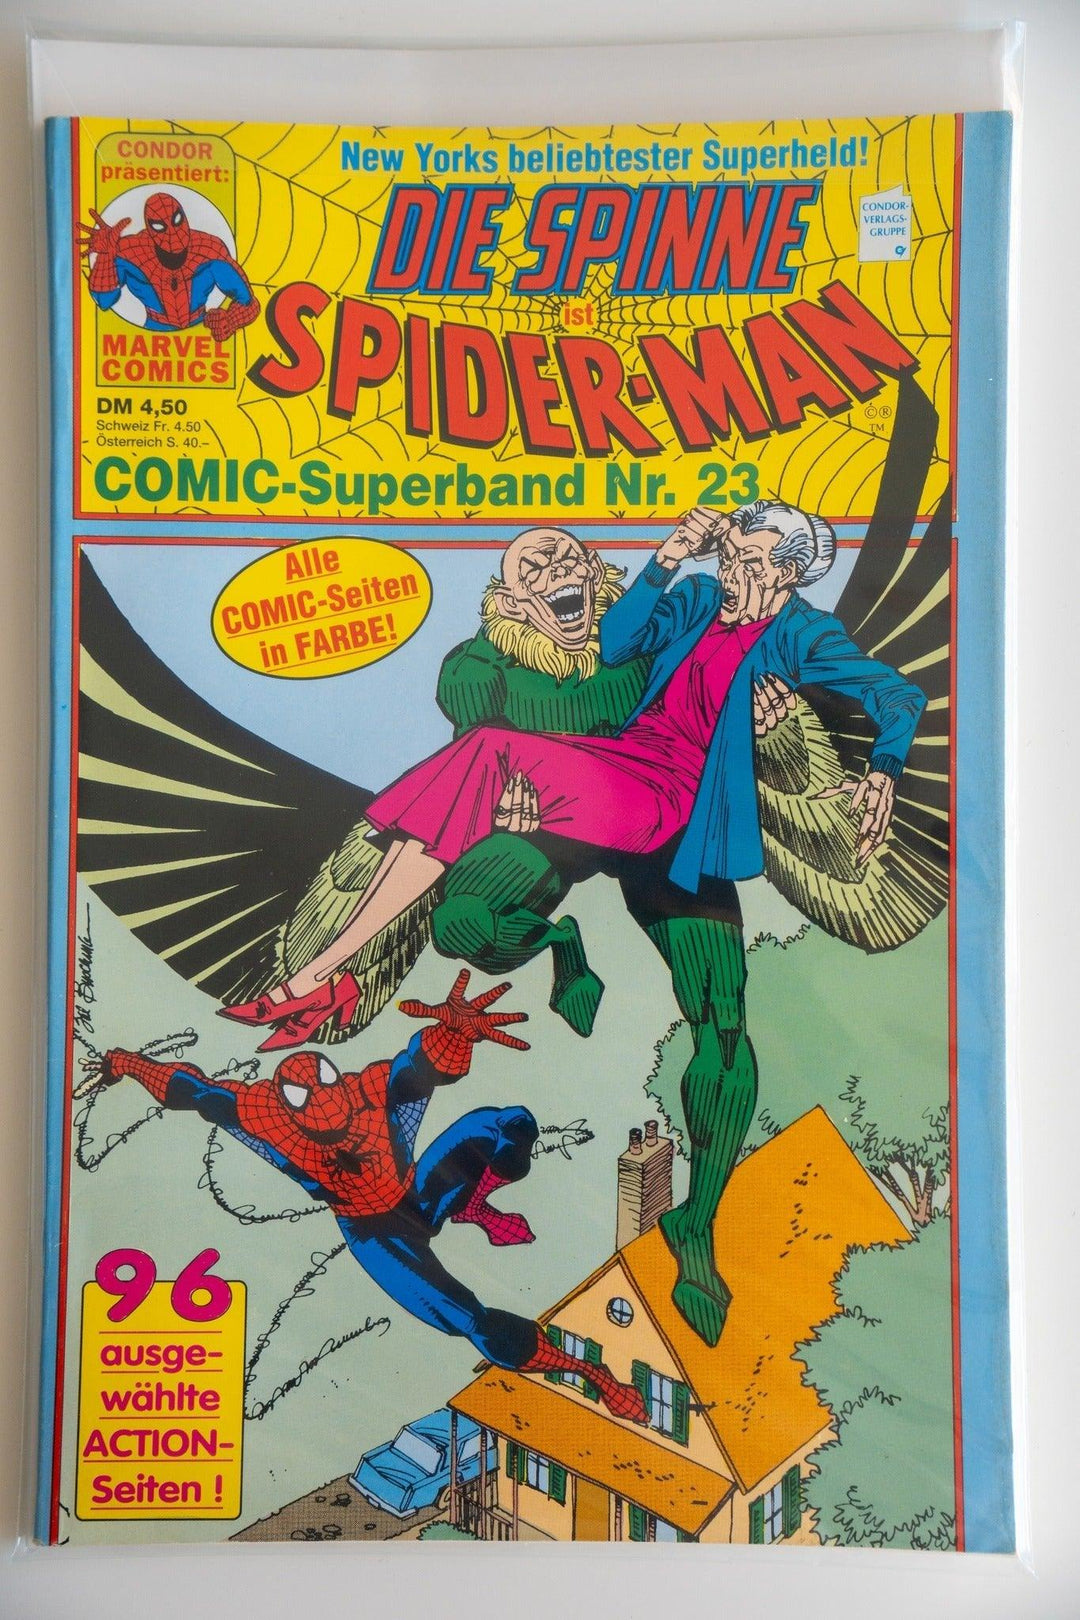 Die Spinne Ist Spider-Man Comic-Superband Nr. 23 - Marvel - Condor Verlag - Z. 2 - Bobbis Store Hunde